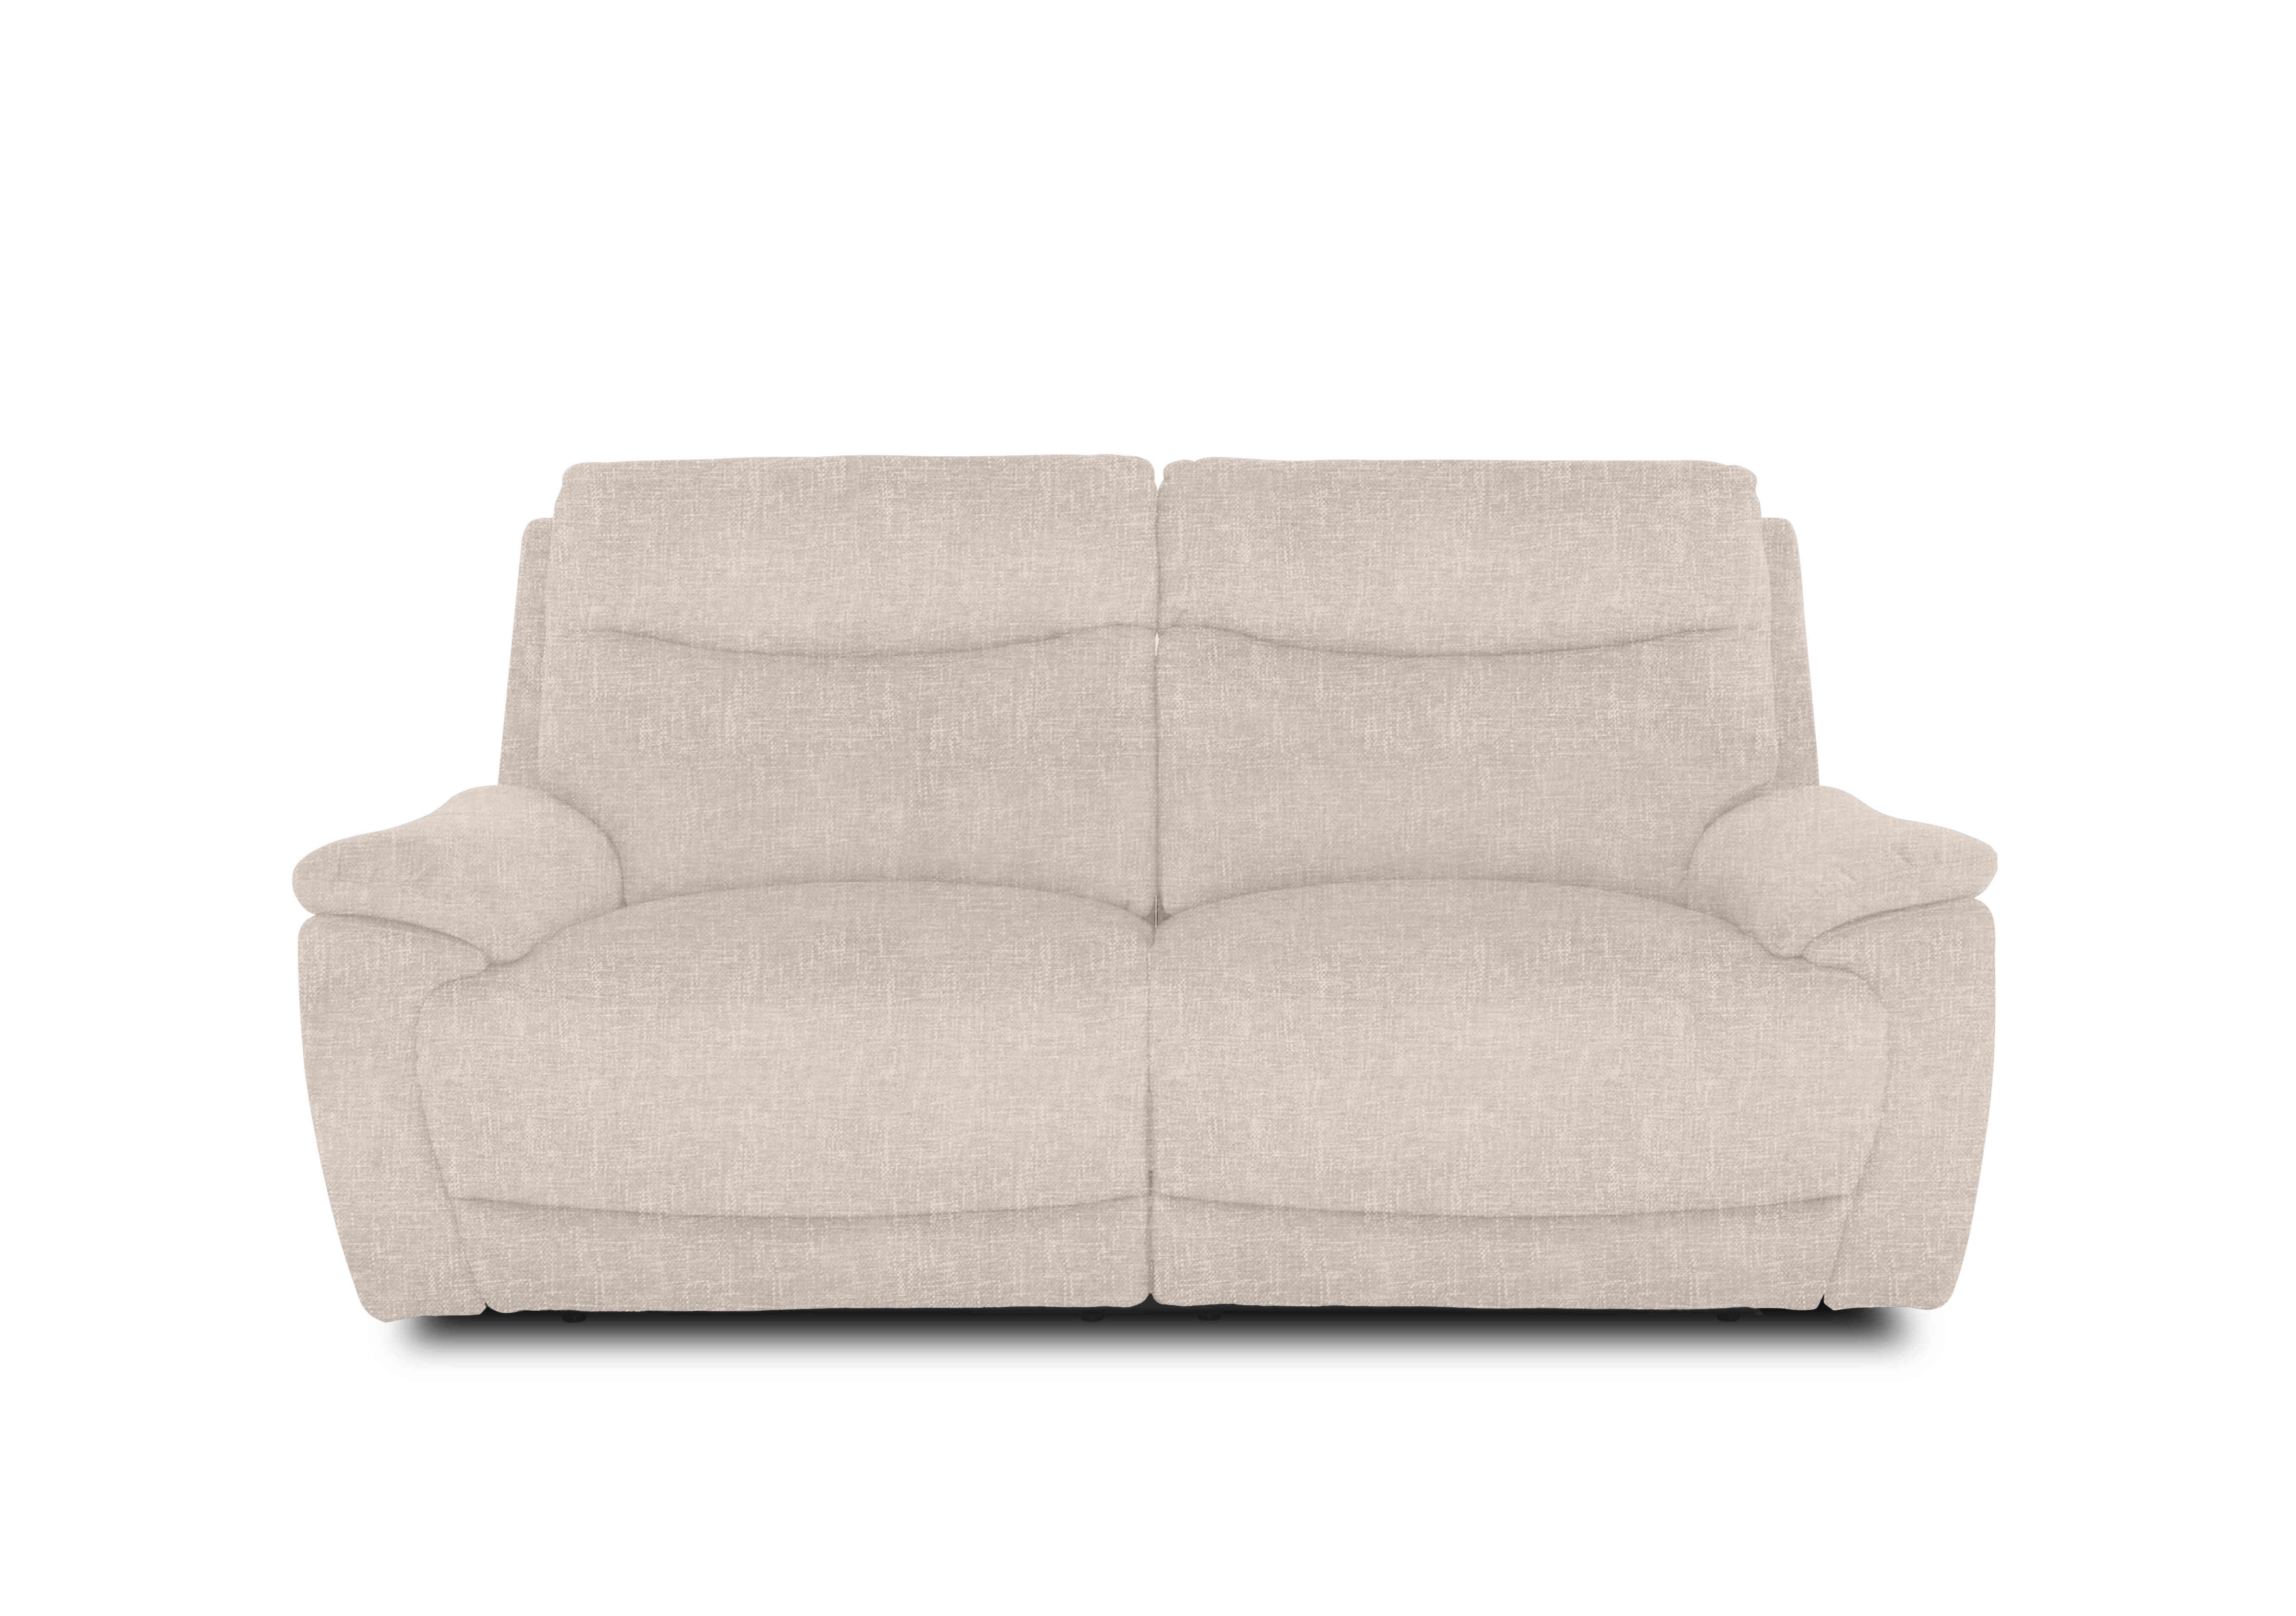 Sloane 3 Seater Fabric Sofa in 13445 Anivia Nature on Furniture Village